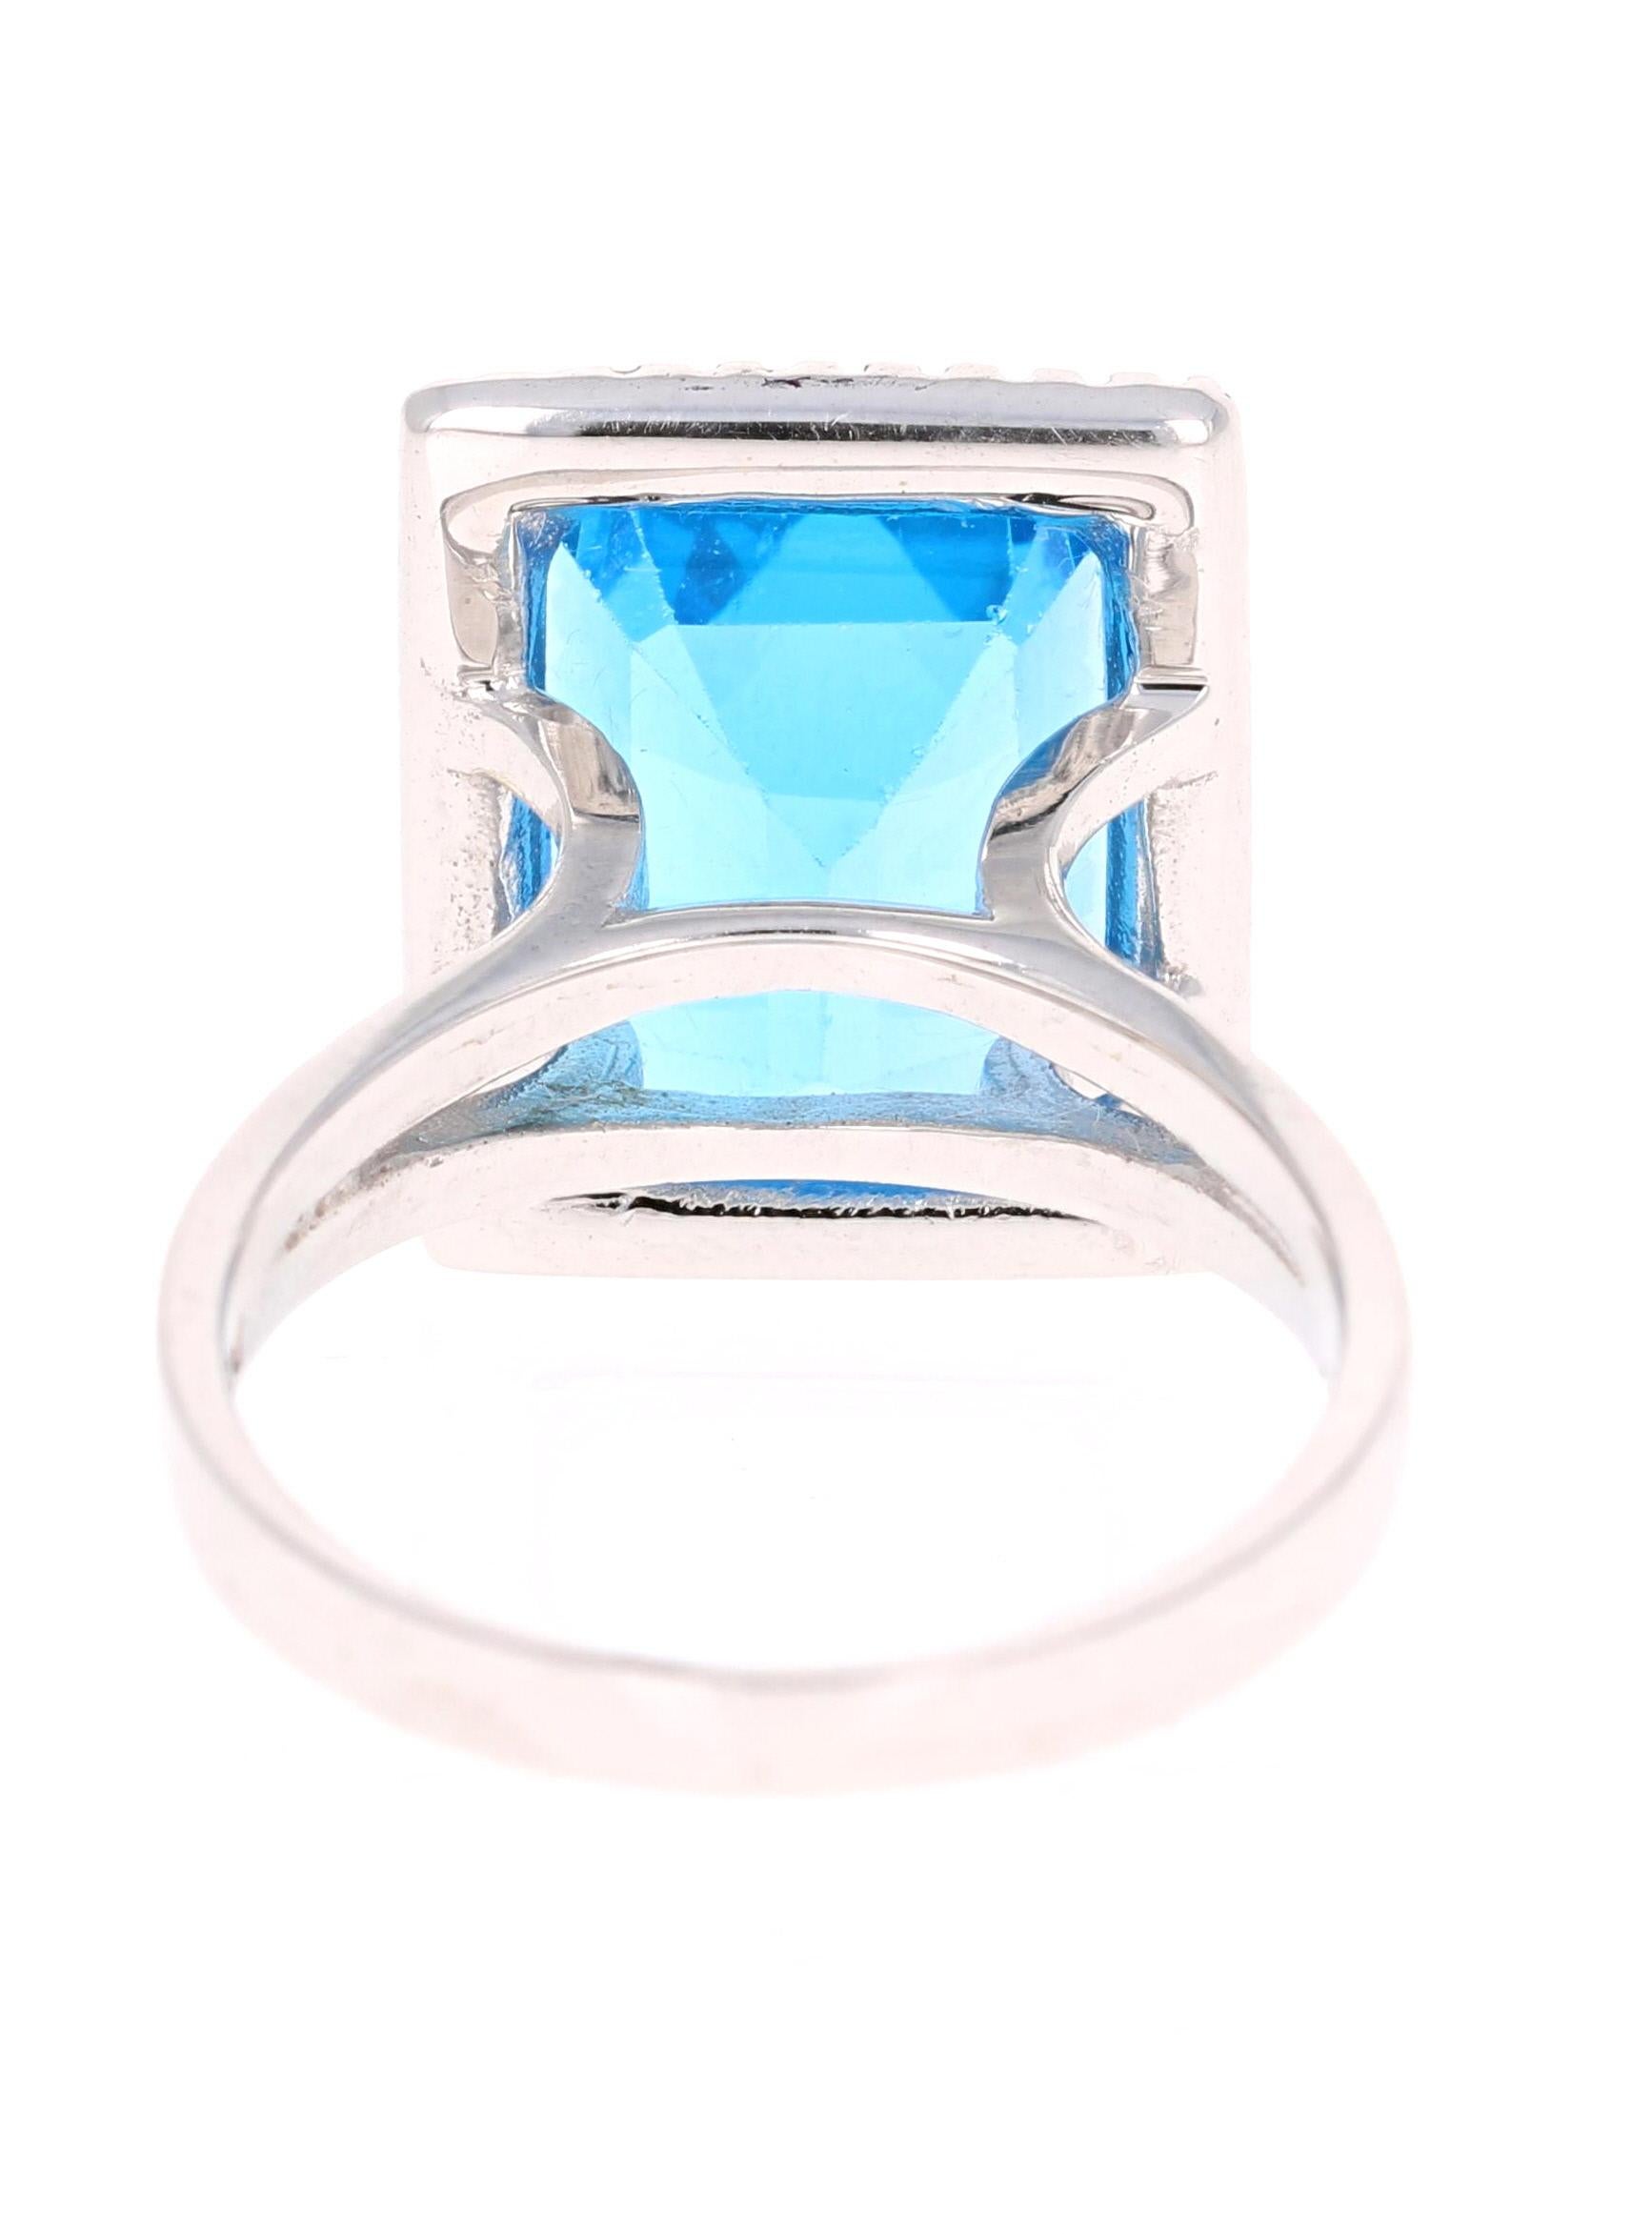 Emerald Cut 10.48 Carat Blue Topaz Diamond White Gold Cocktail Ring